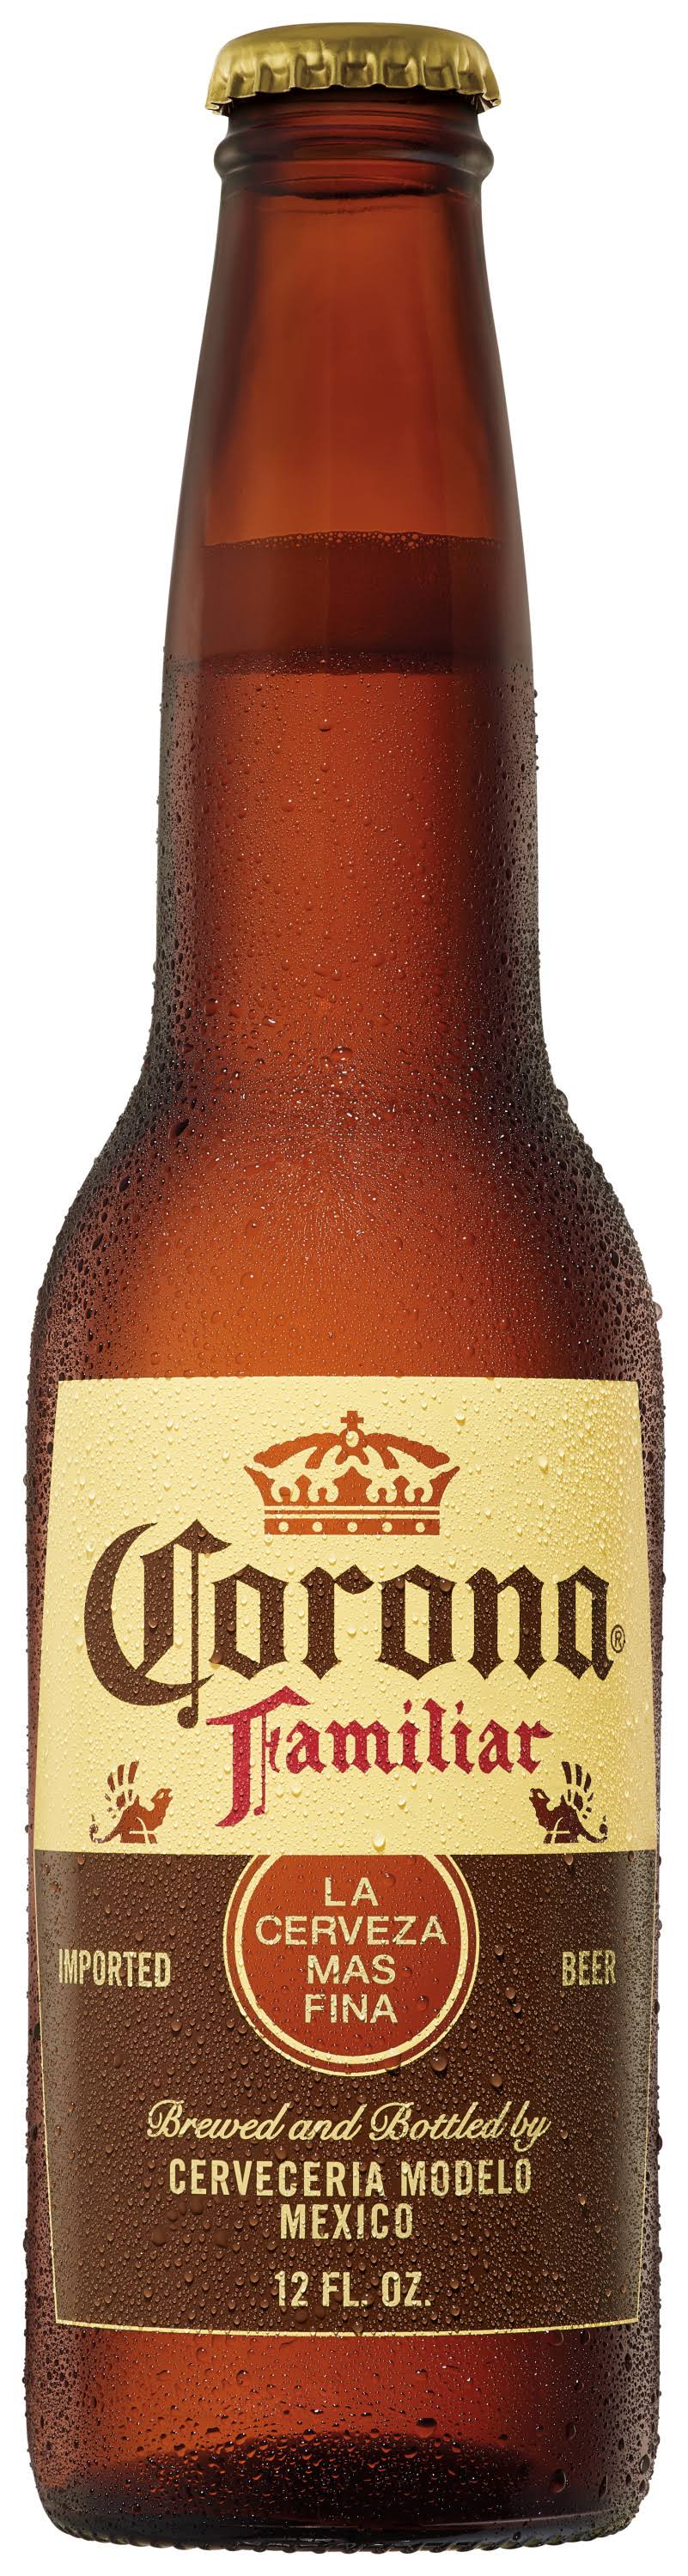 Corona Beer, Imported, Familiar - 12 fl oz